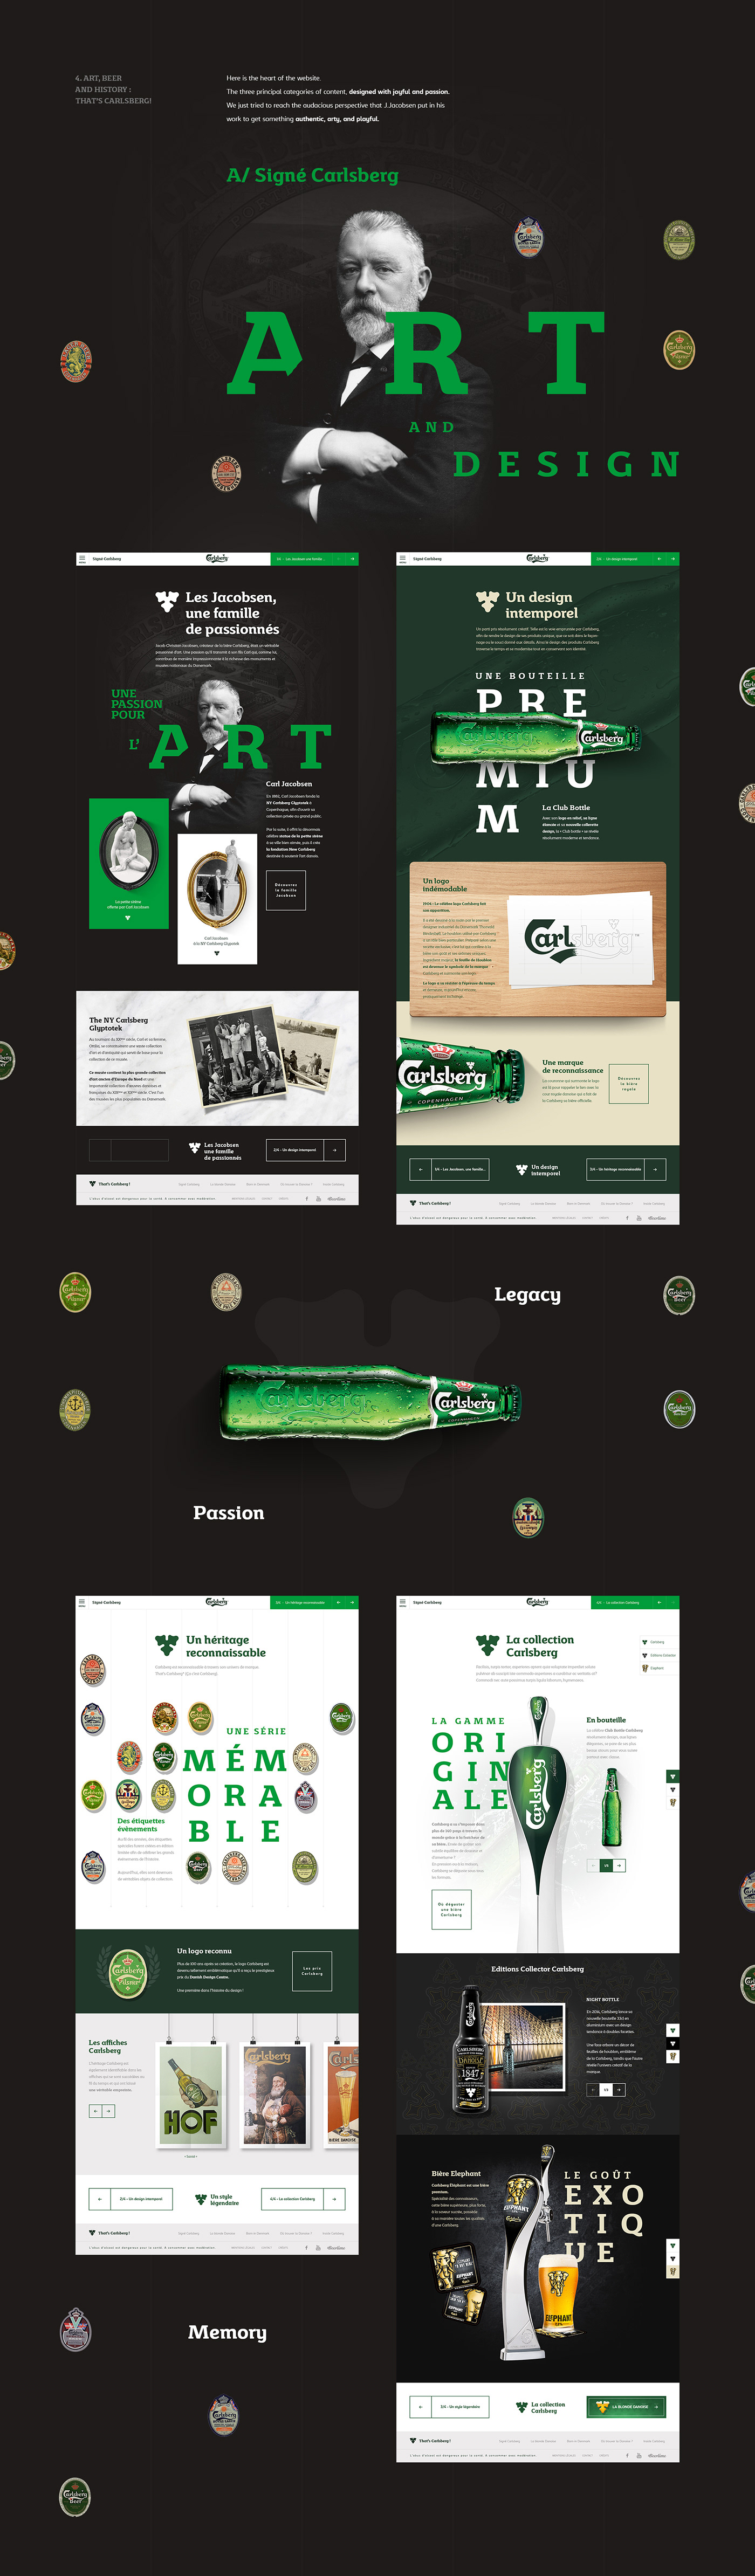 Carlsberg beer bigyouth danish cool denmark Hipster Webdesign art direction  UI